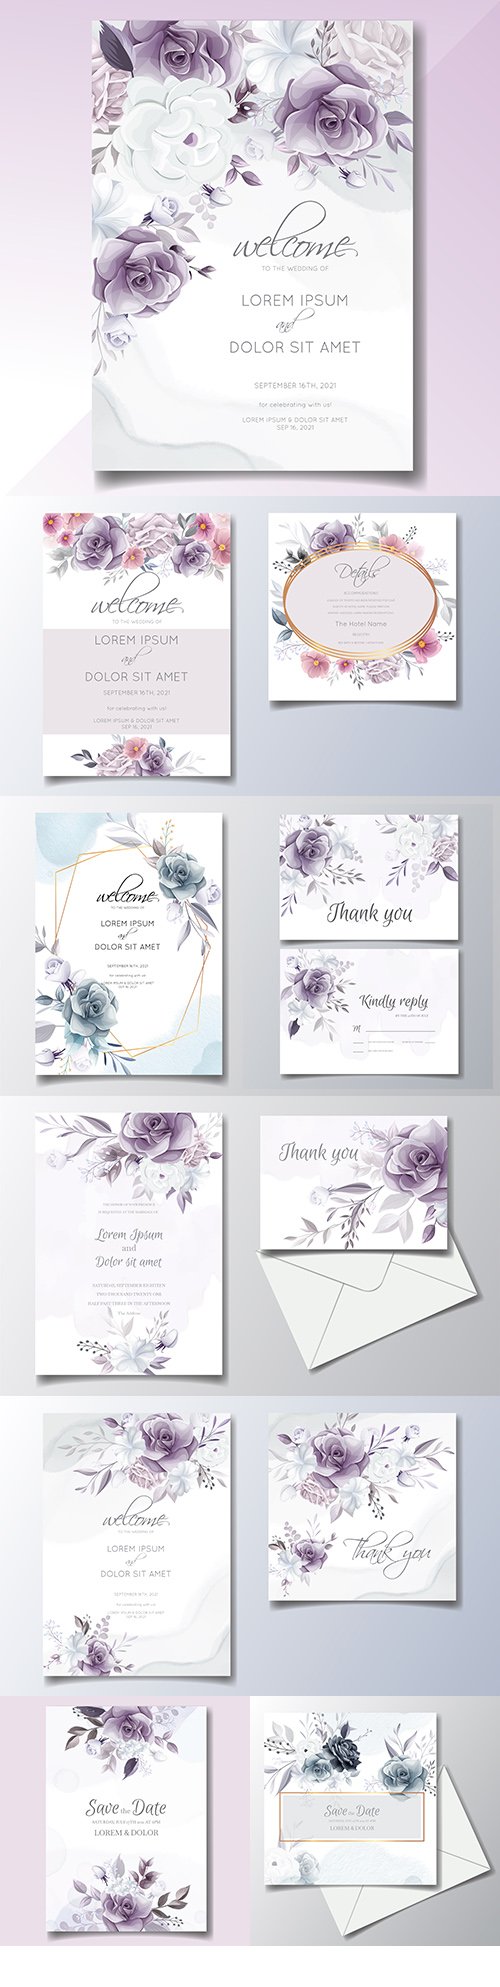 Elegant wedding invitation card with purple flowers